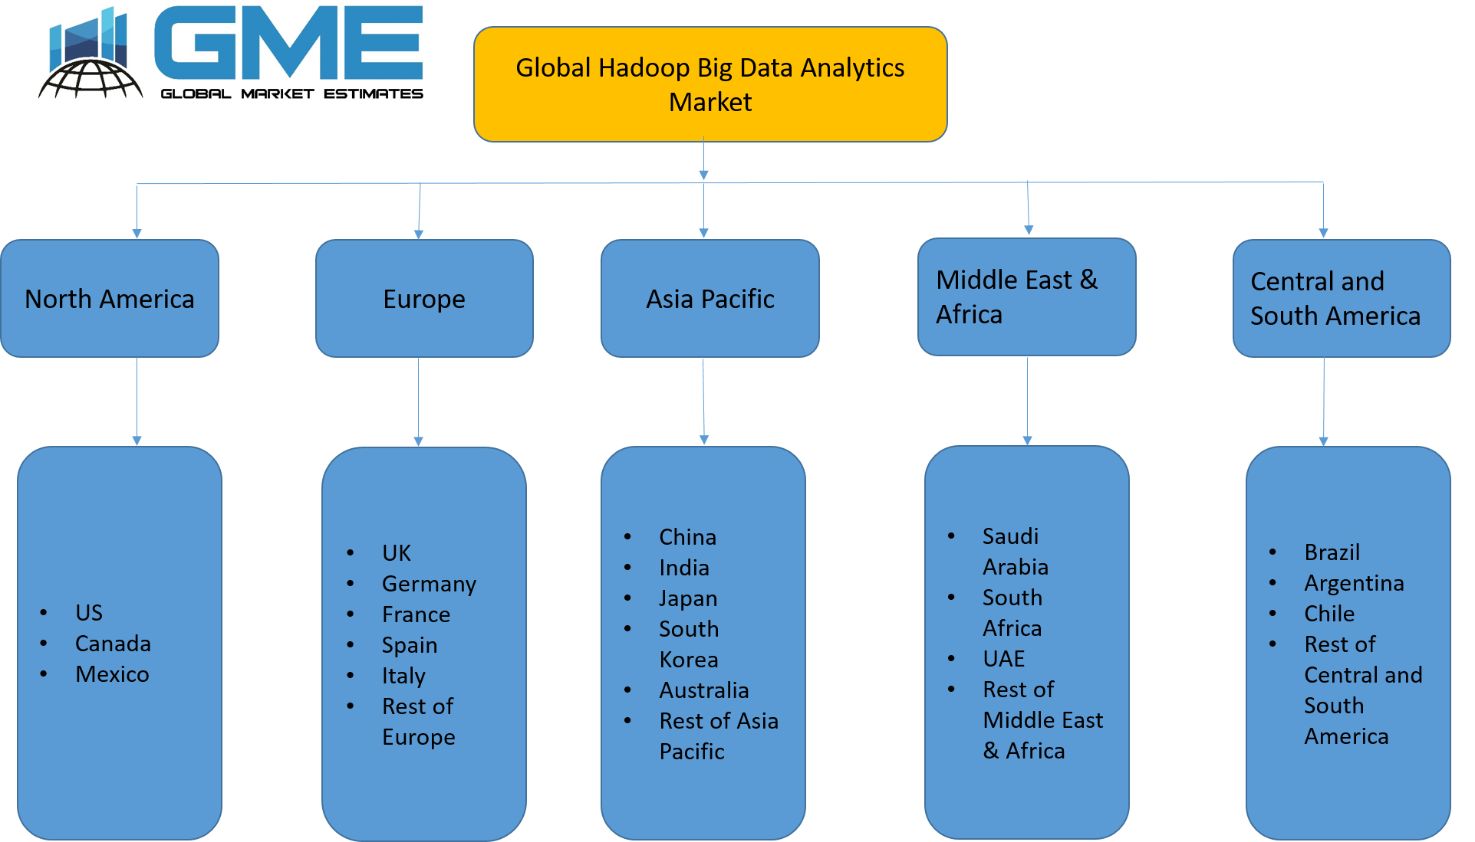 Global Hadoop Big Data Analytics Market Segmentation